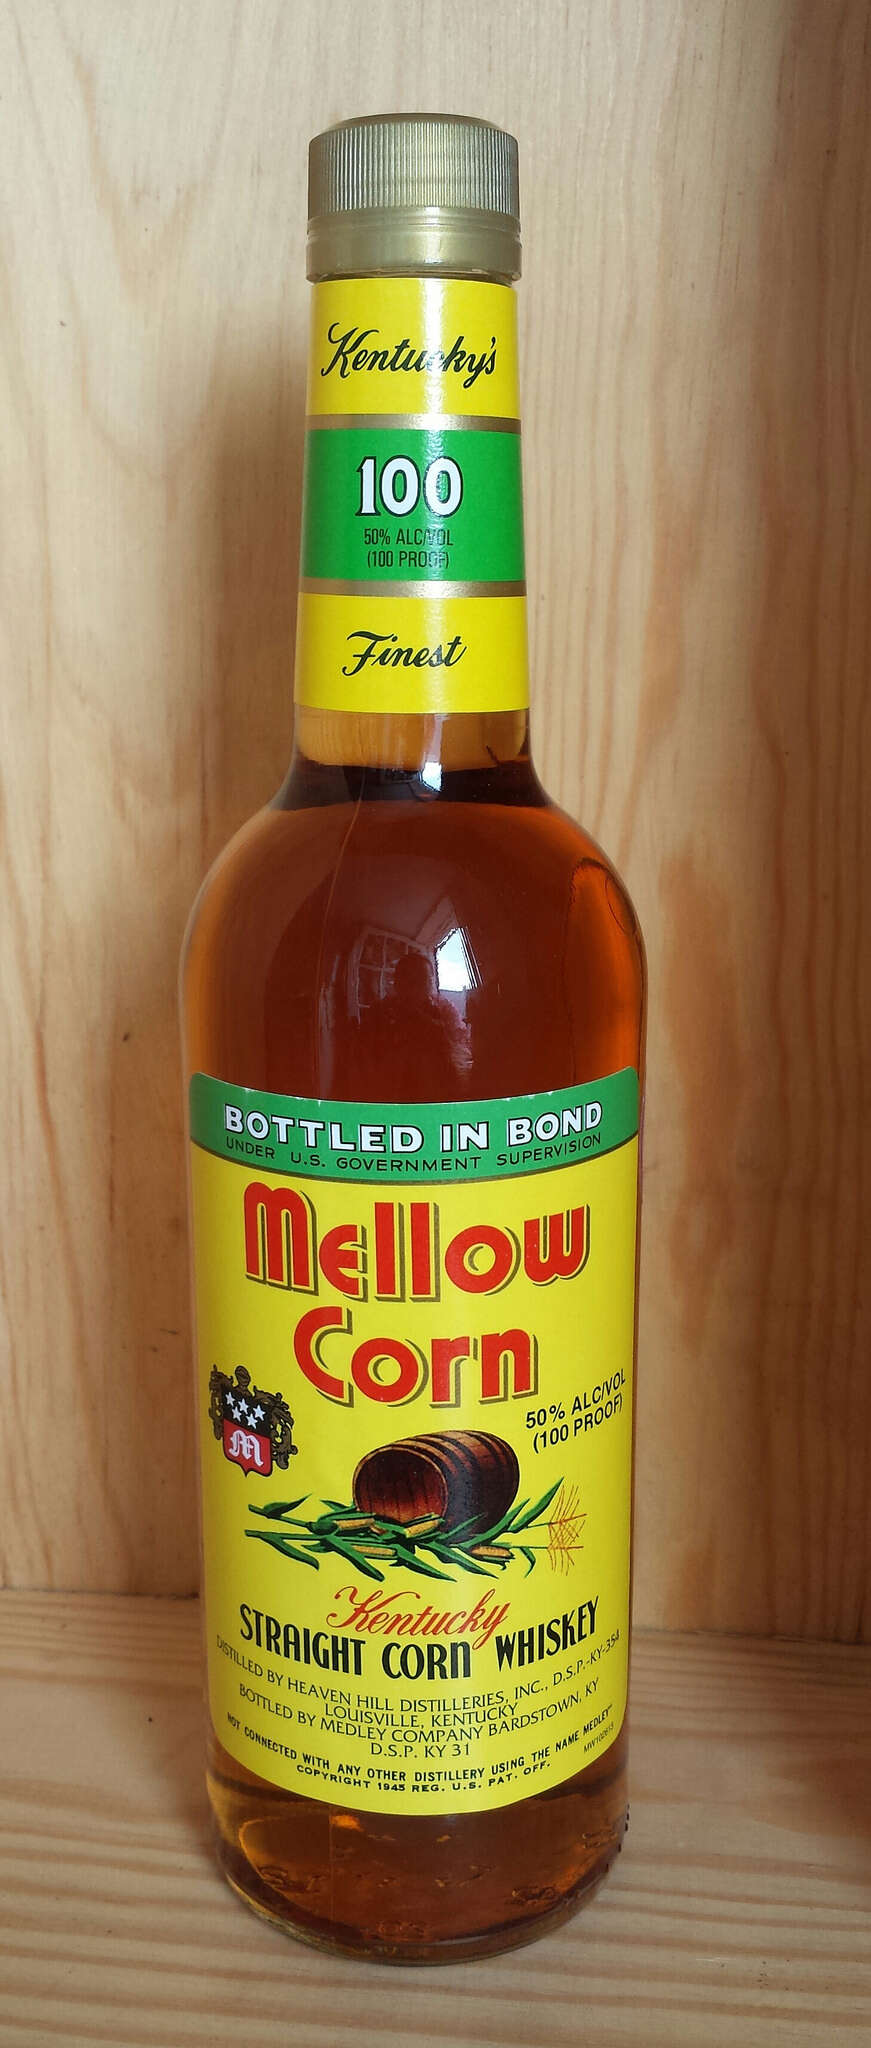 Mellow corn